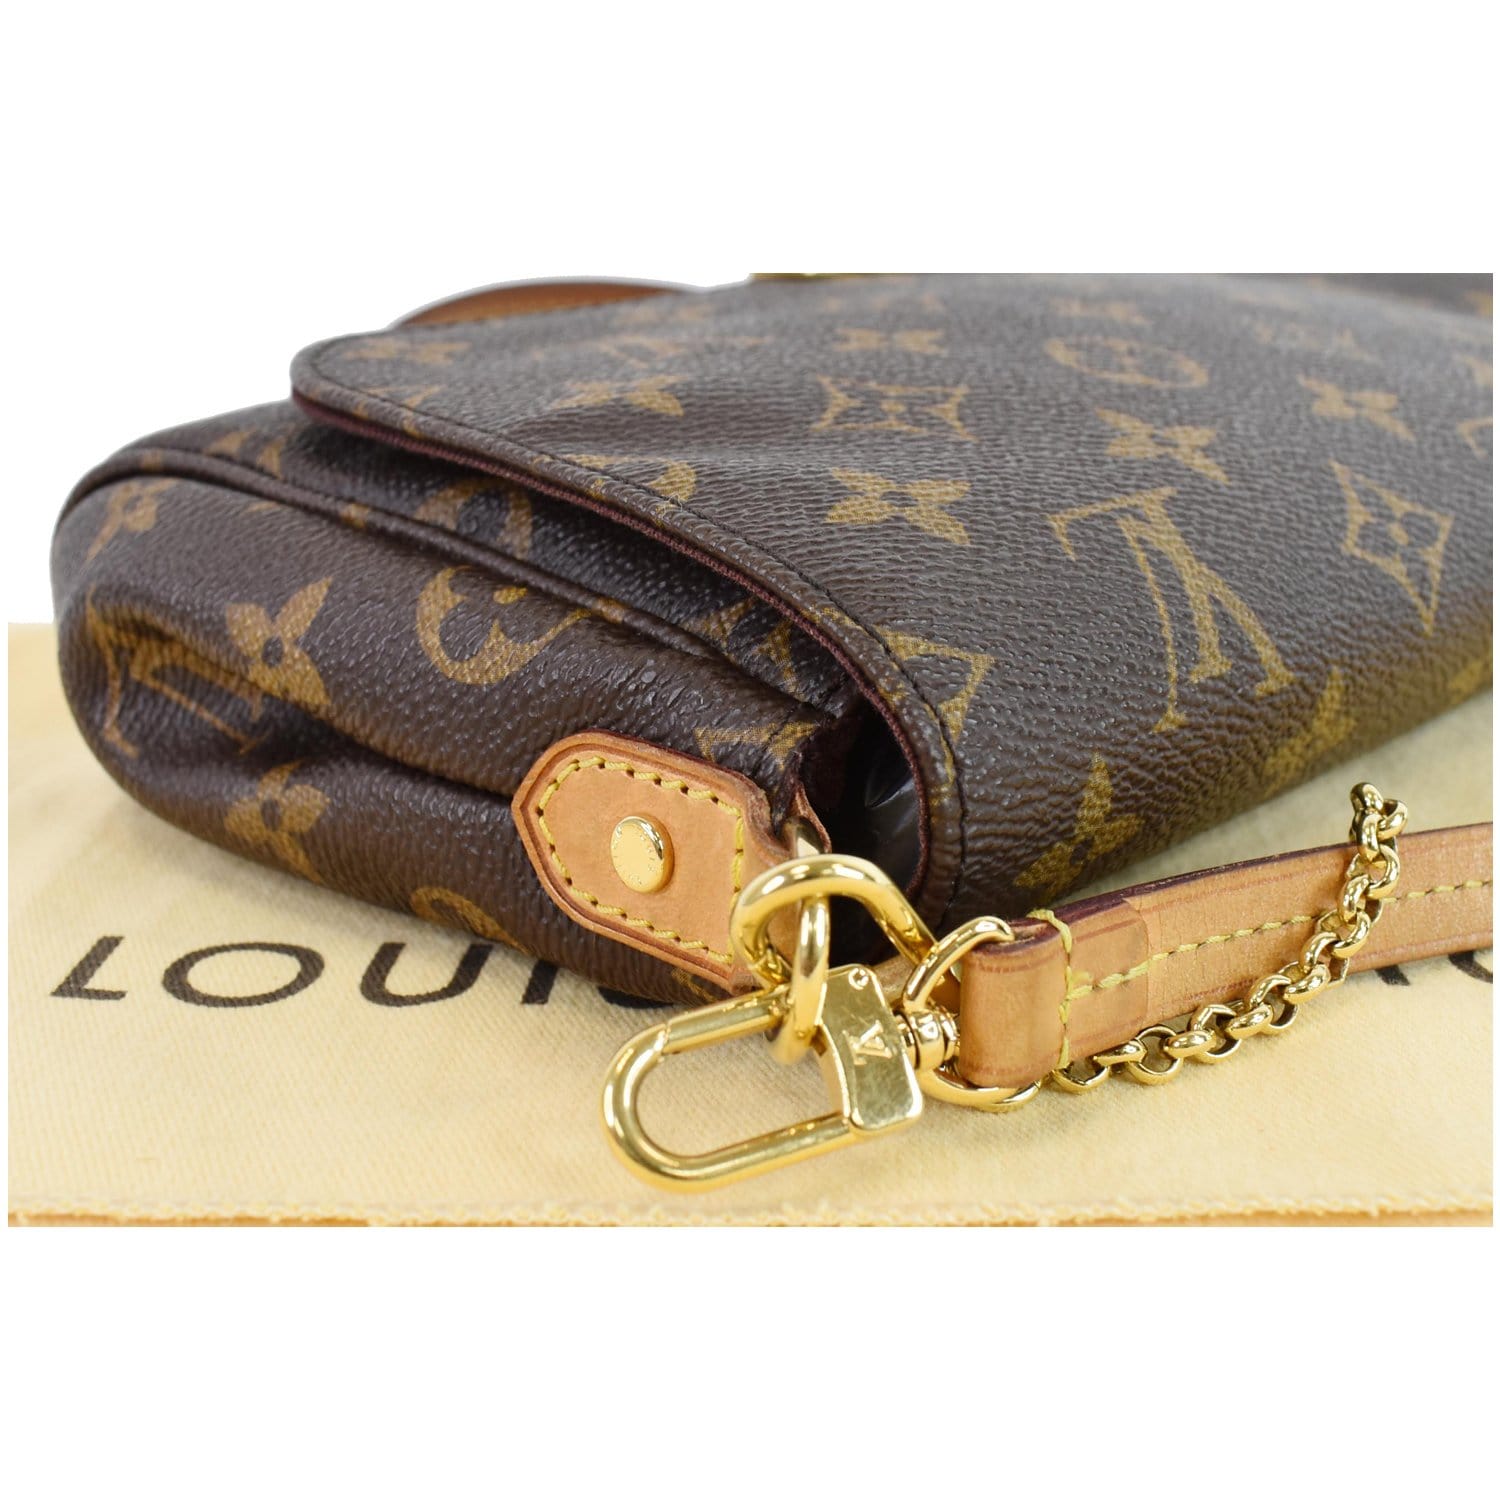 Louis Vuitton Favorite MM - Brown Crossbody Bags, Handbags